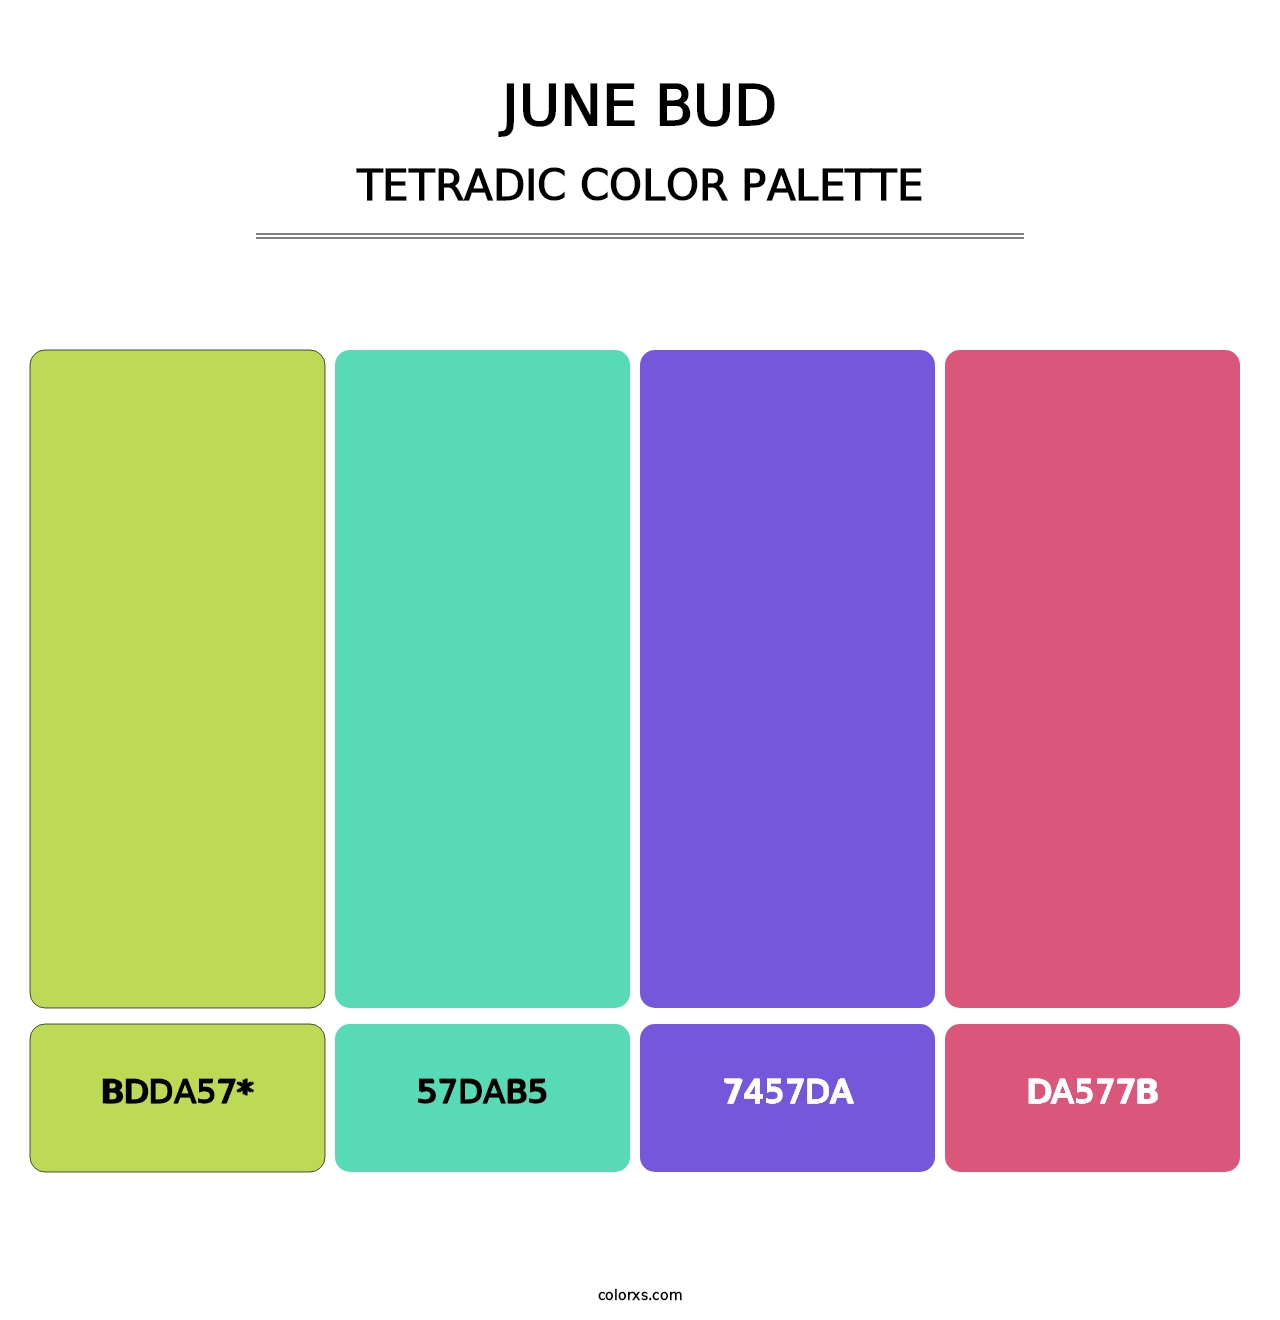 June Bud - Tetradic Color Palette